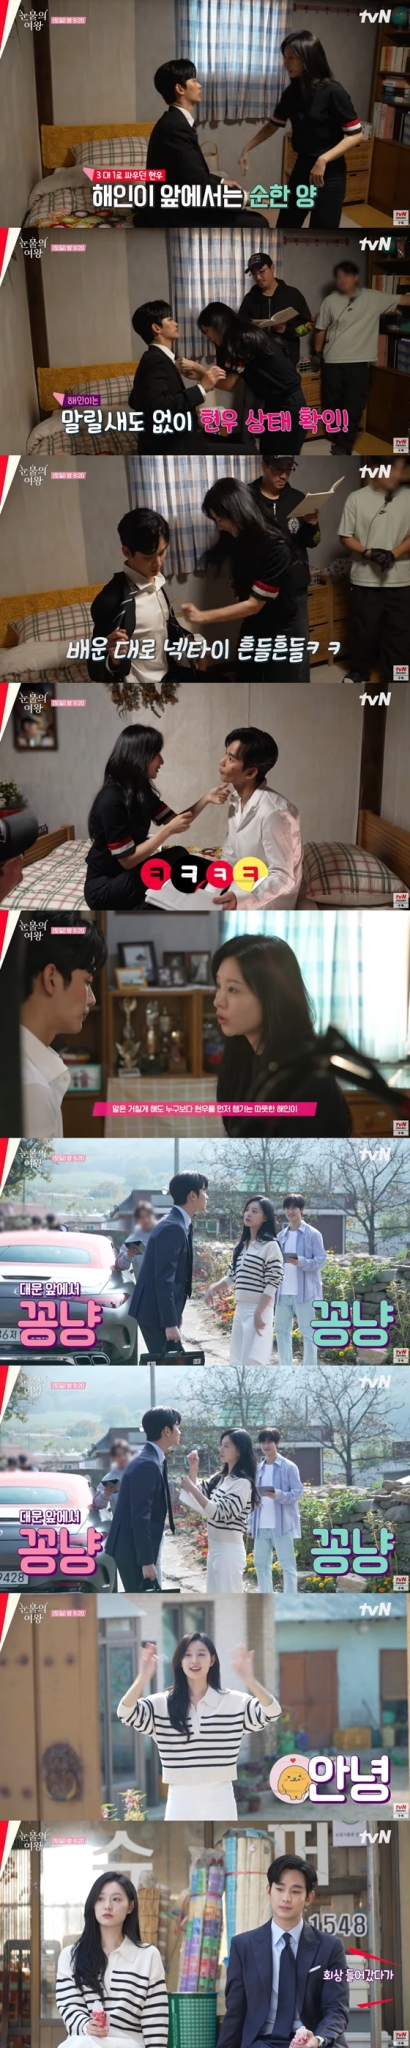 tvN 토일드라마 '눈물의 여왕'의 김수현, 김지원./사진=유튜브 채널 'tvN drama' 영상 캡처